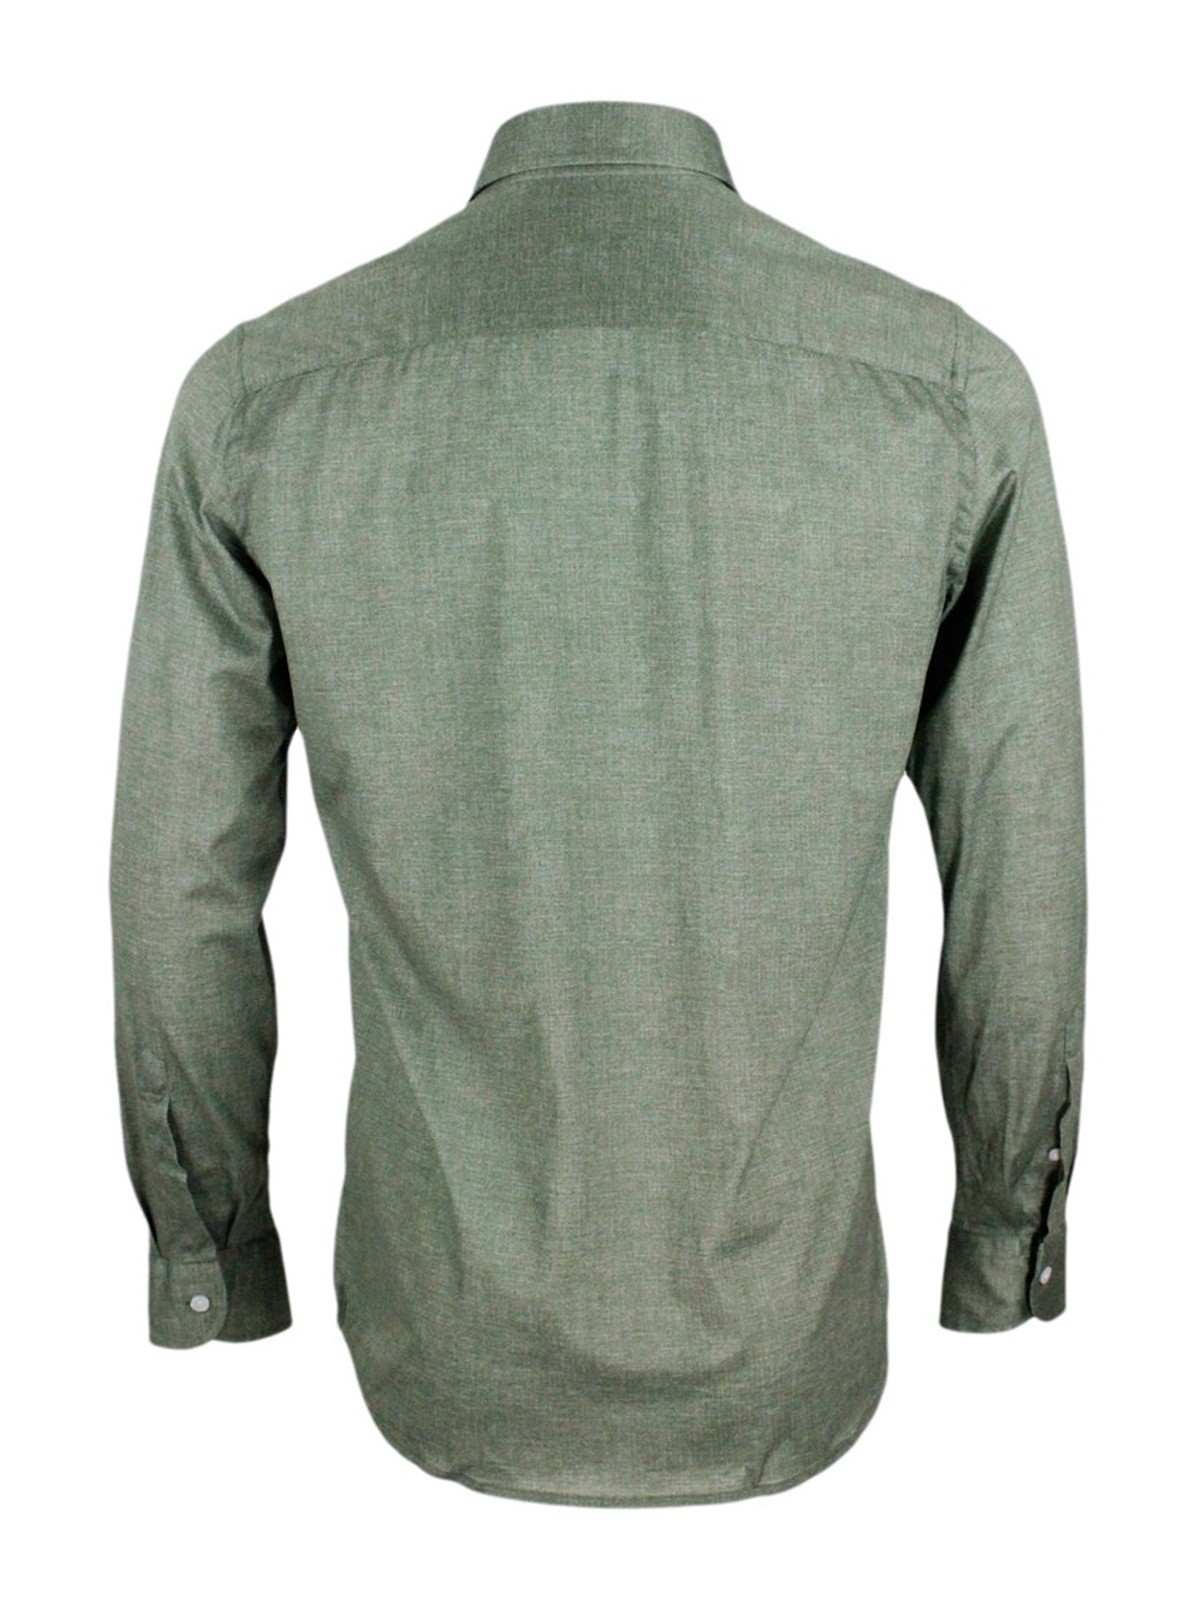 Shirts Sonrisa - Cotton canvas shirt - FJ15J13405 | Shop online at iKRIX